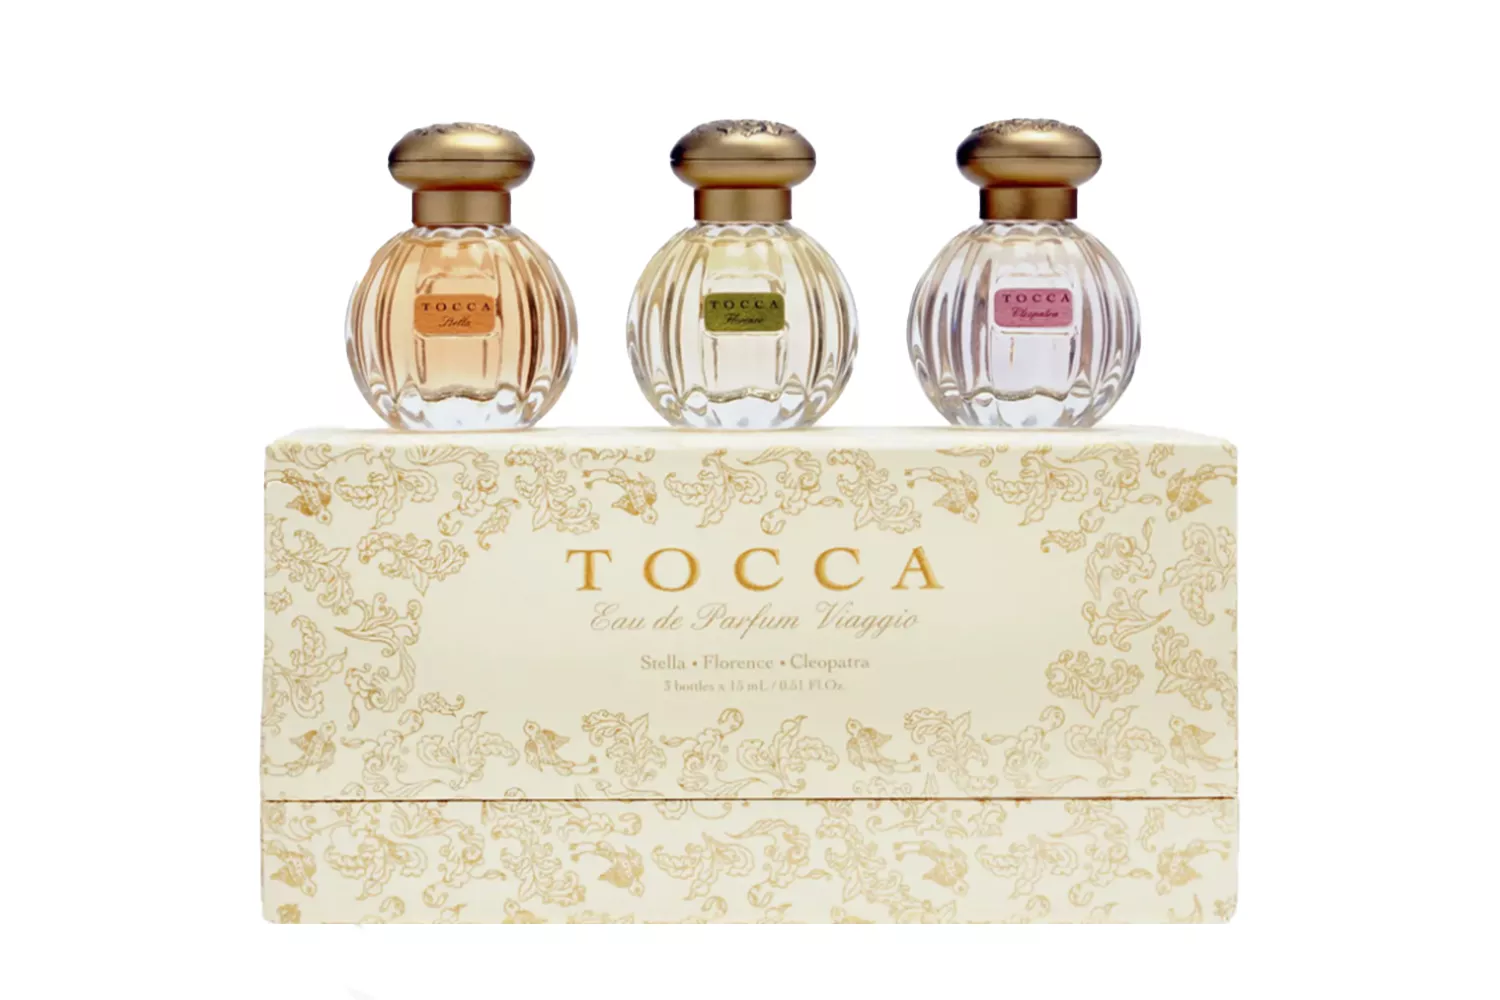 Tocca Eau de Parfum Viaggio Travel Fragrance Set